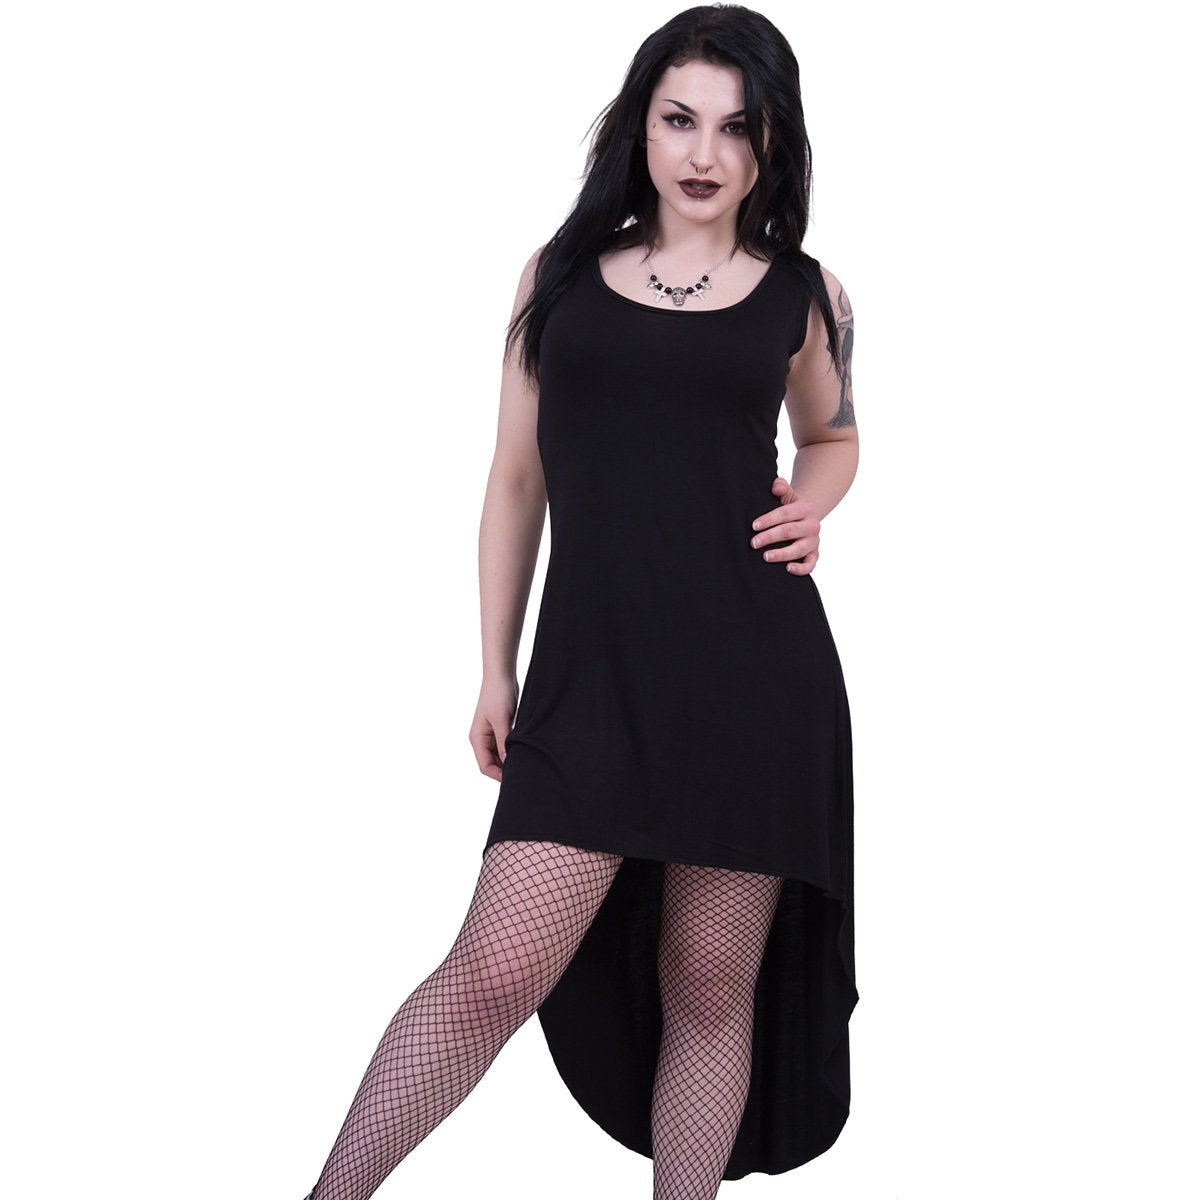 GOTHIC ELEGANCE - Gothic High-Low Hem Dress Black - Spiral USA